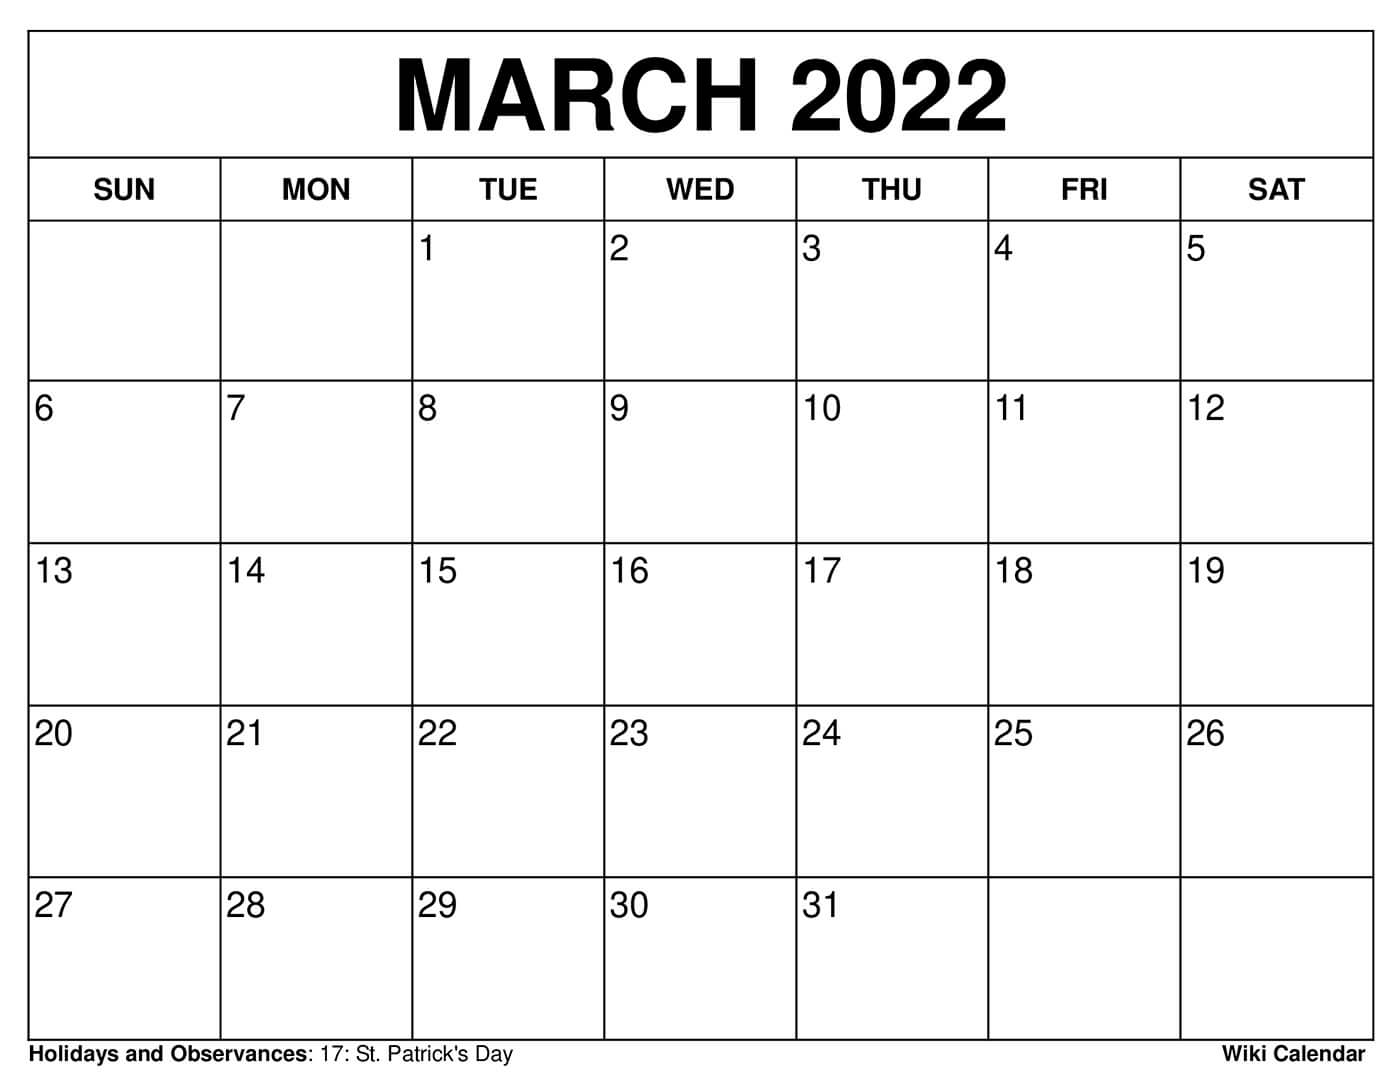 March 2022 Calendar Template Free Printable March 2022 Calendars - Wiki Calendar